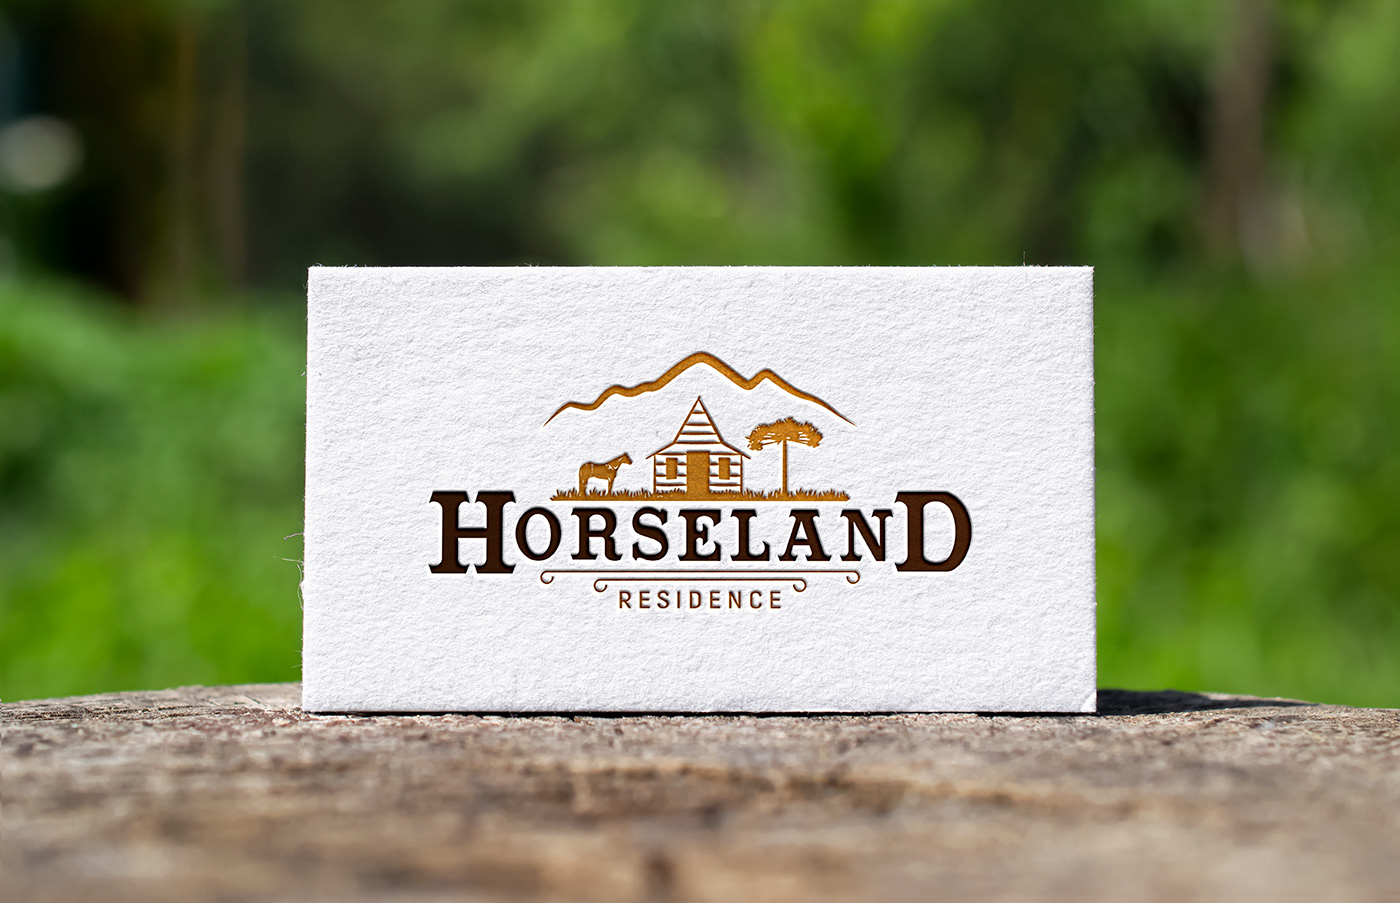 cavalo design haras Hipica horse Horseland equestre residential stable